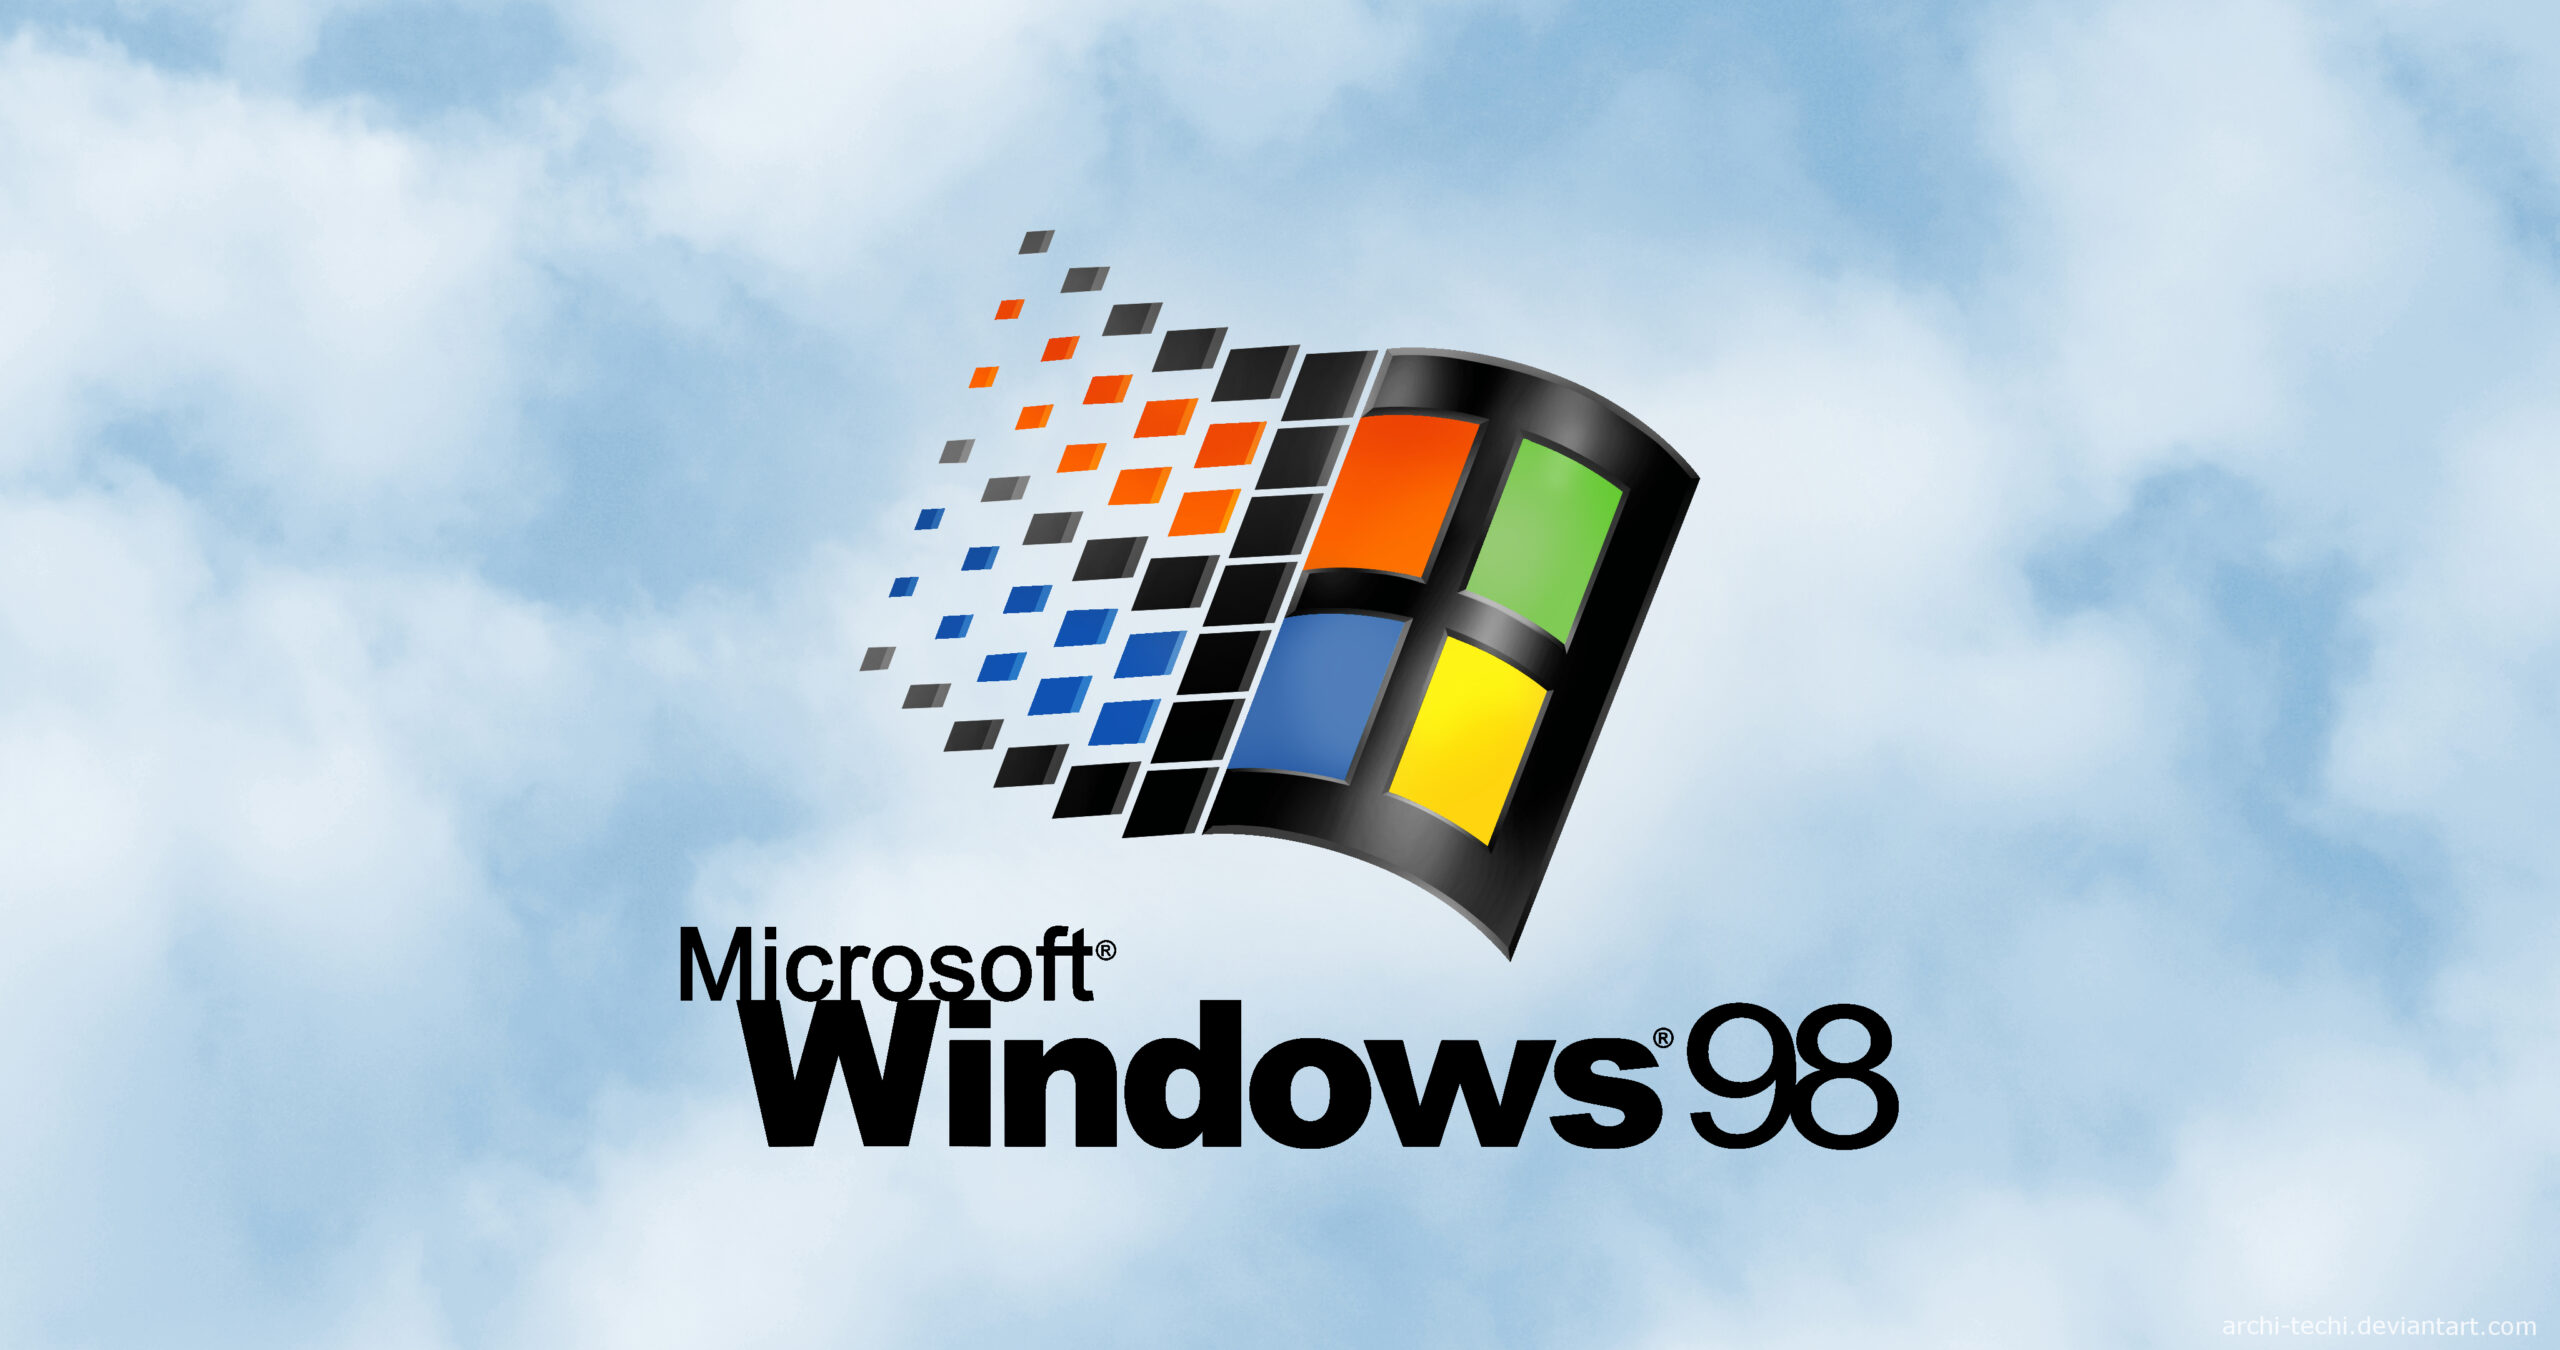 Microsoft Original Windows Classic Wallpaper. Windows Latest News